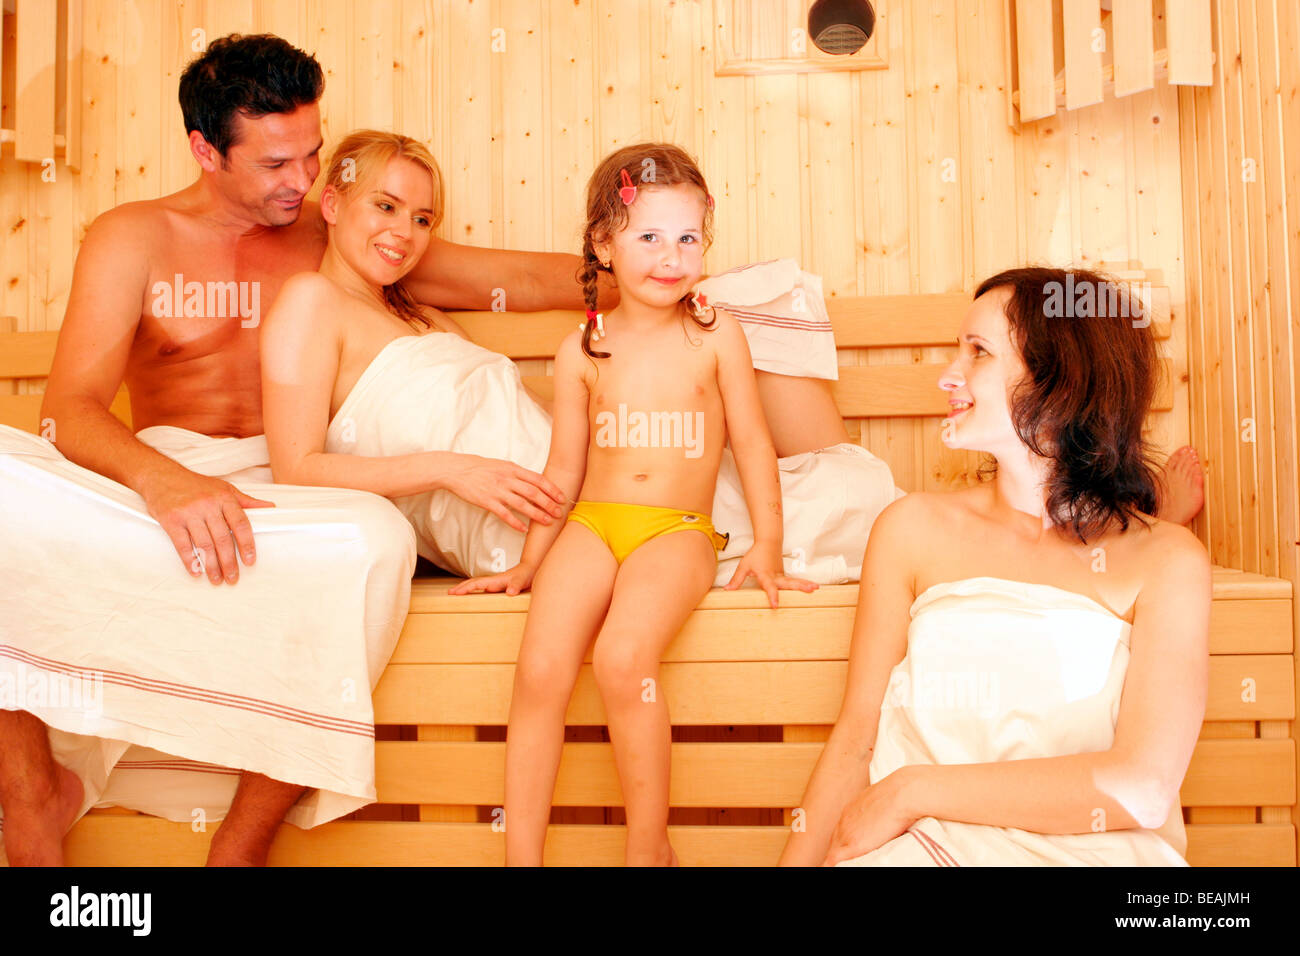 People in sauna. Stock Photo